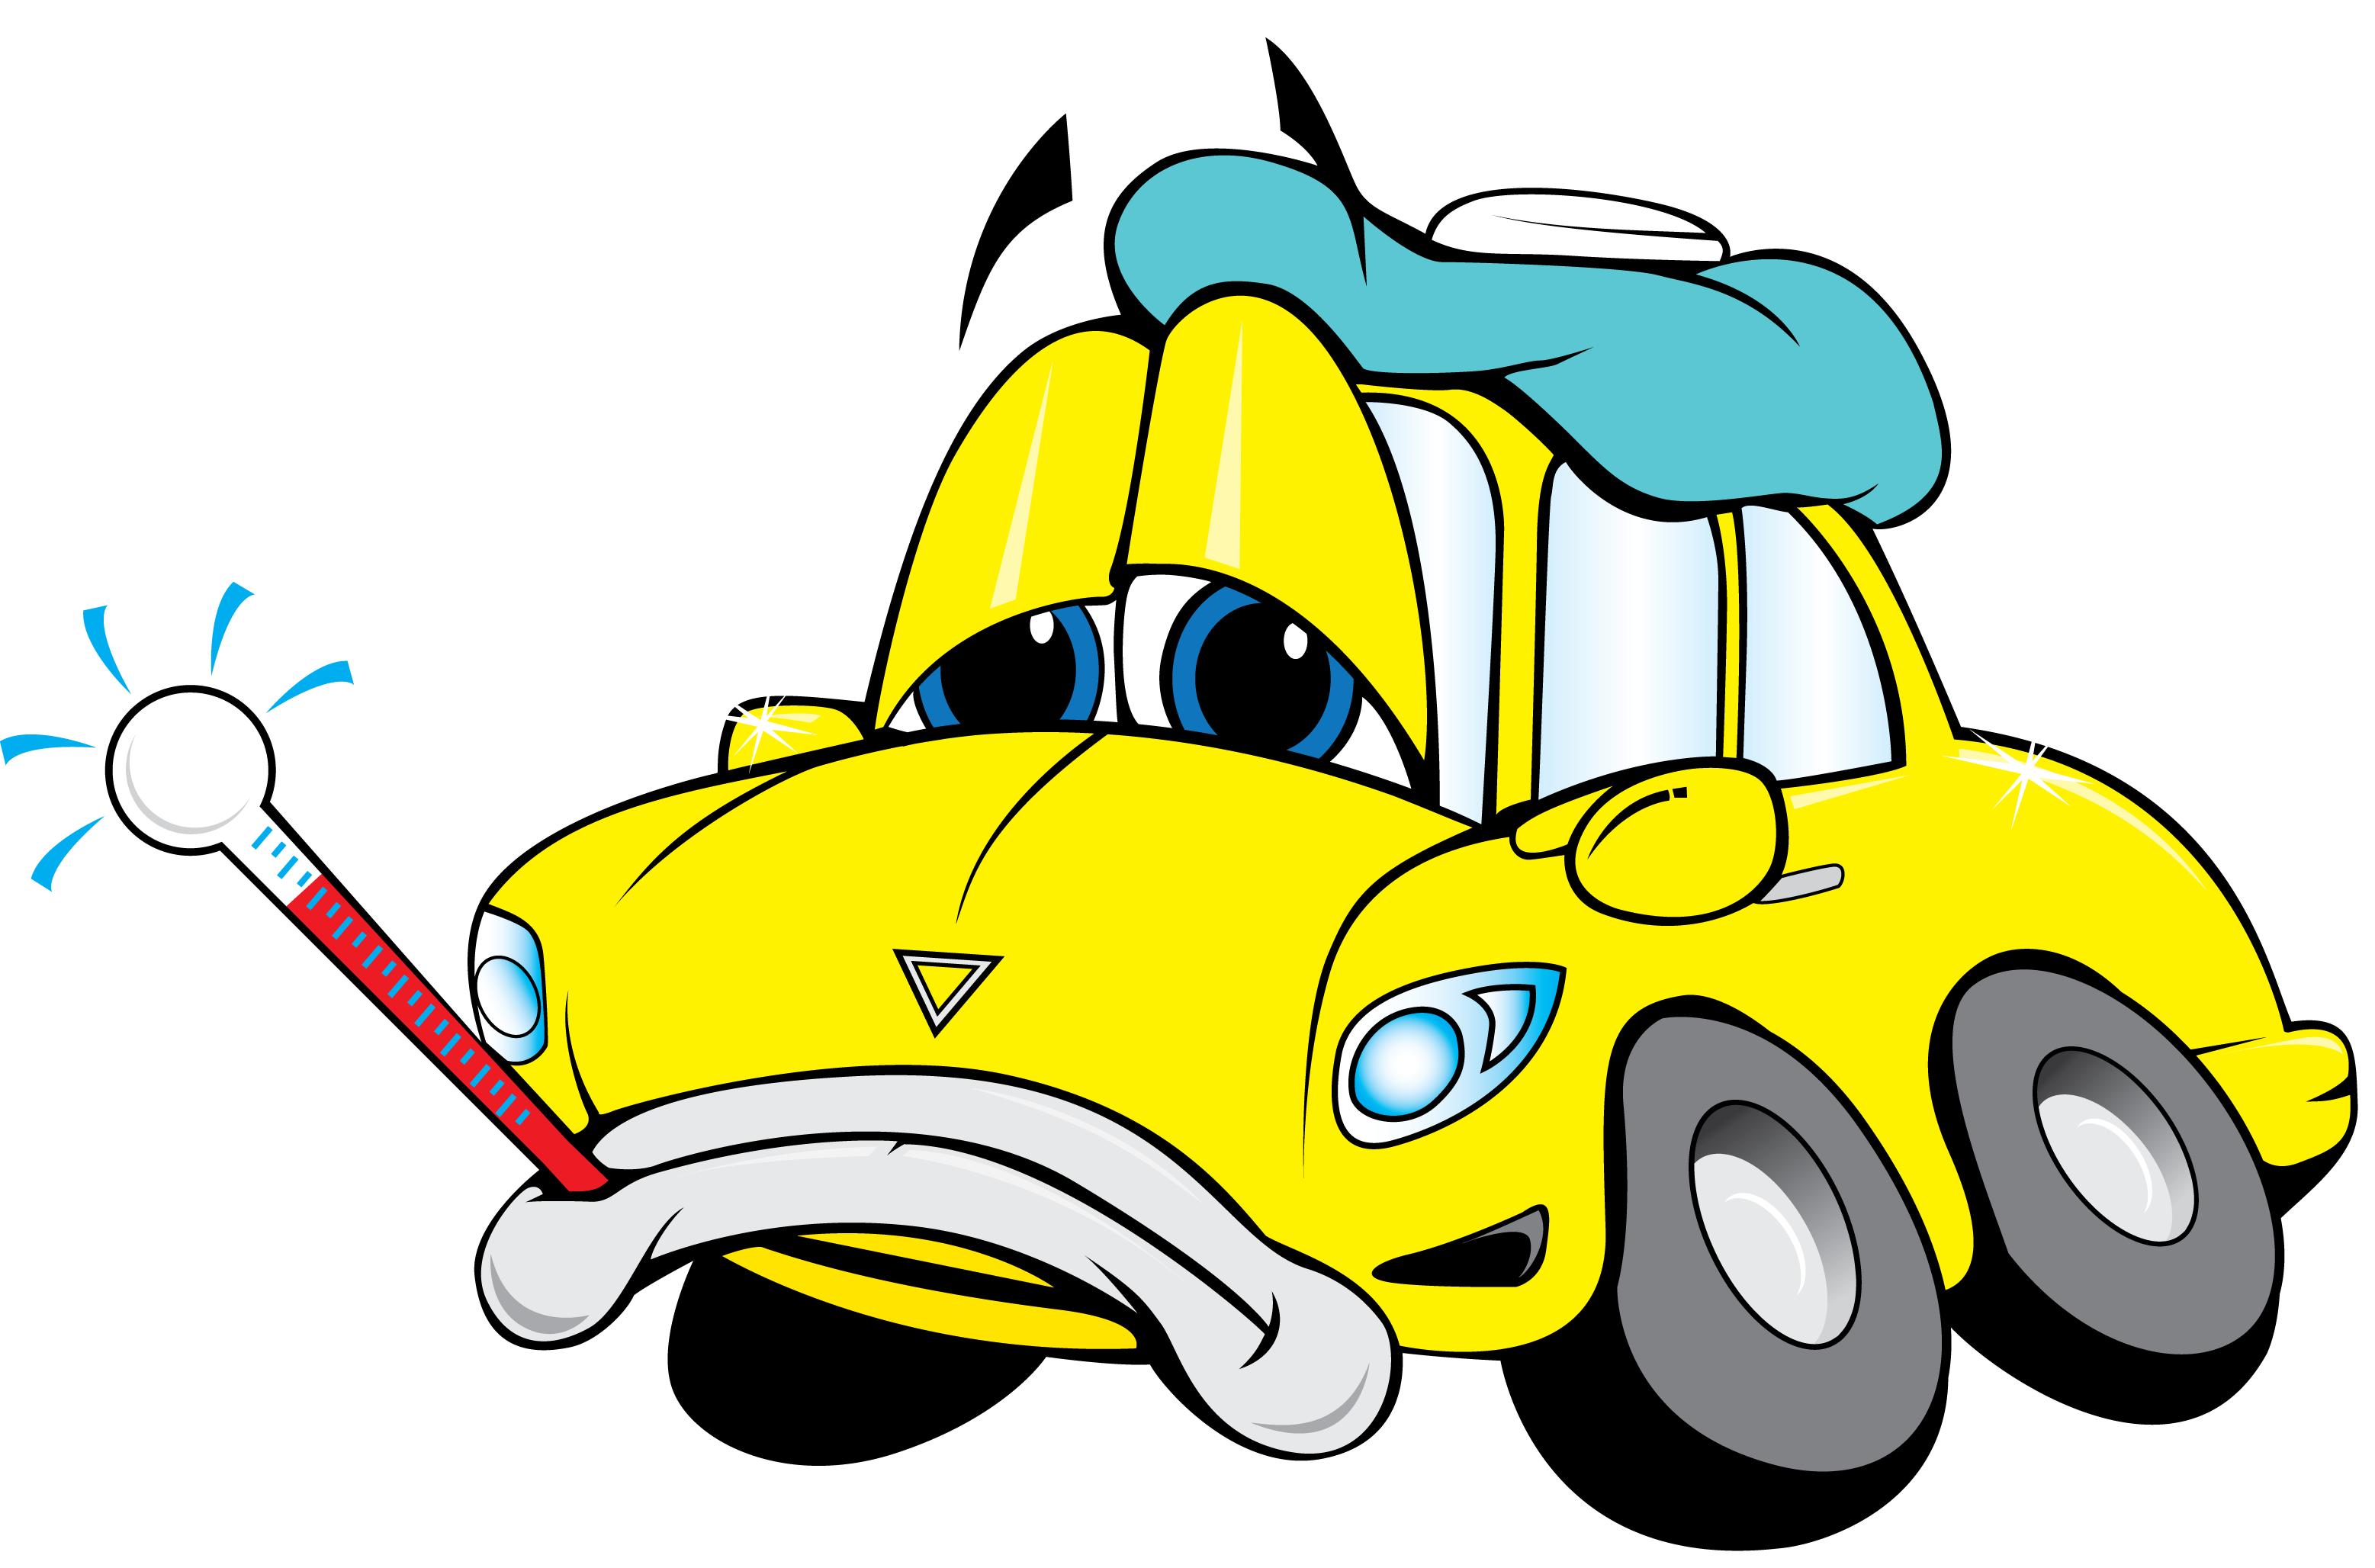 Picture Of A Cartoon Car | Free Download Clip Art | Free Clip Art ...